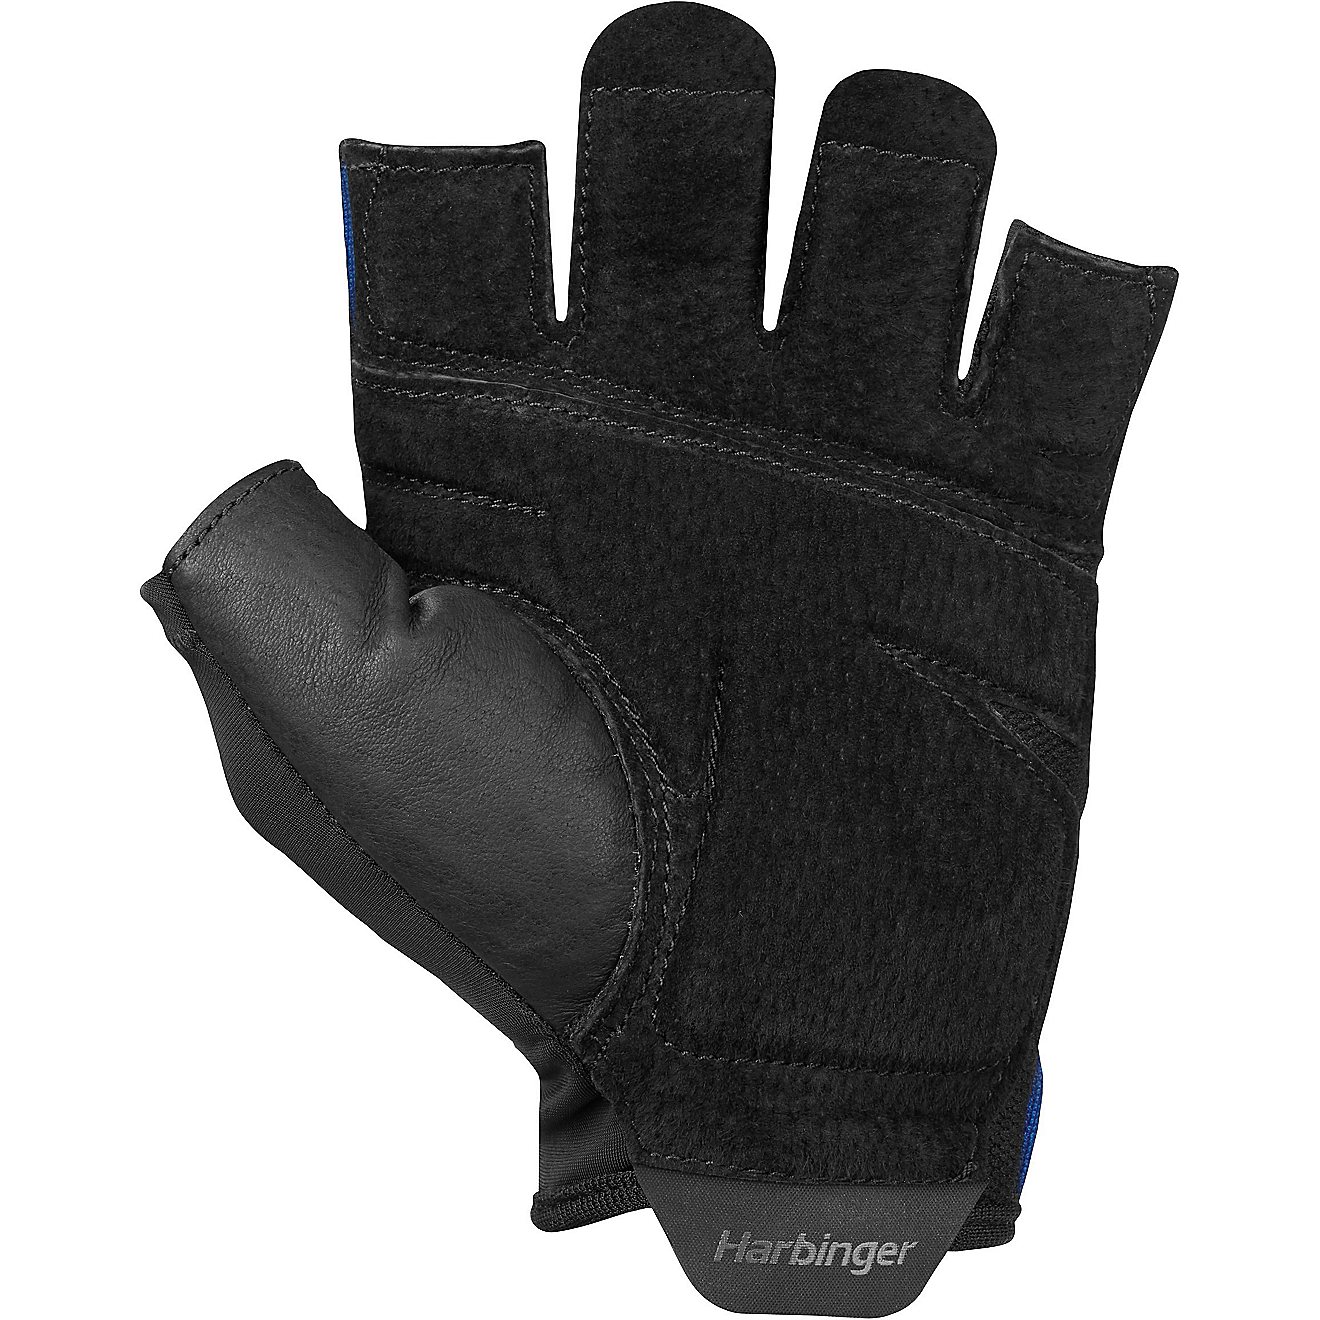 Harbinger Men's Training Grip Wrist Wrap Gloves                                                                                  - view number 3